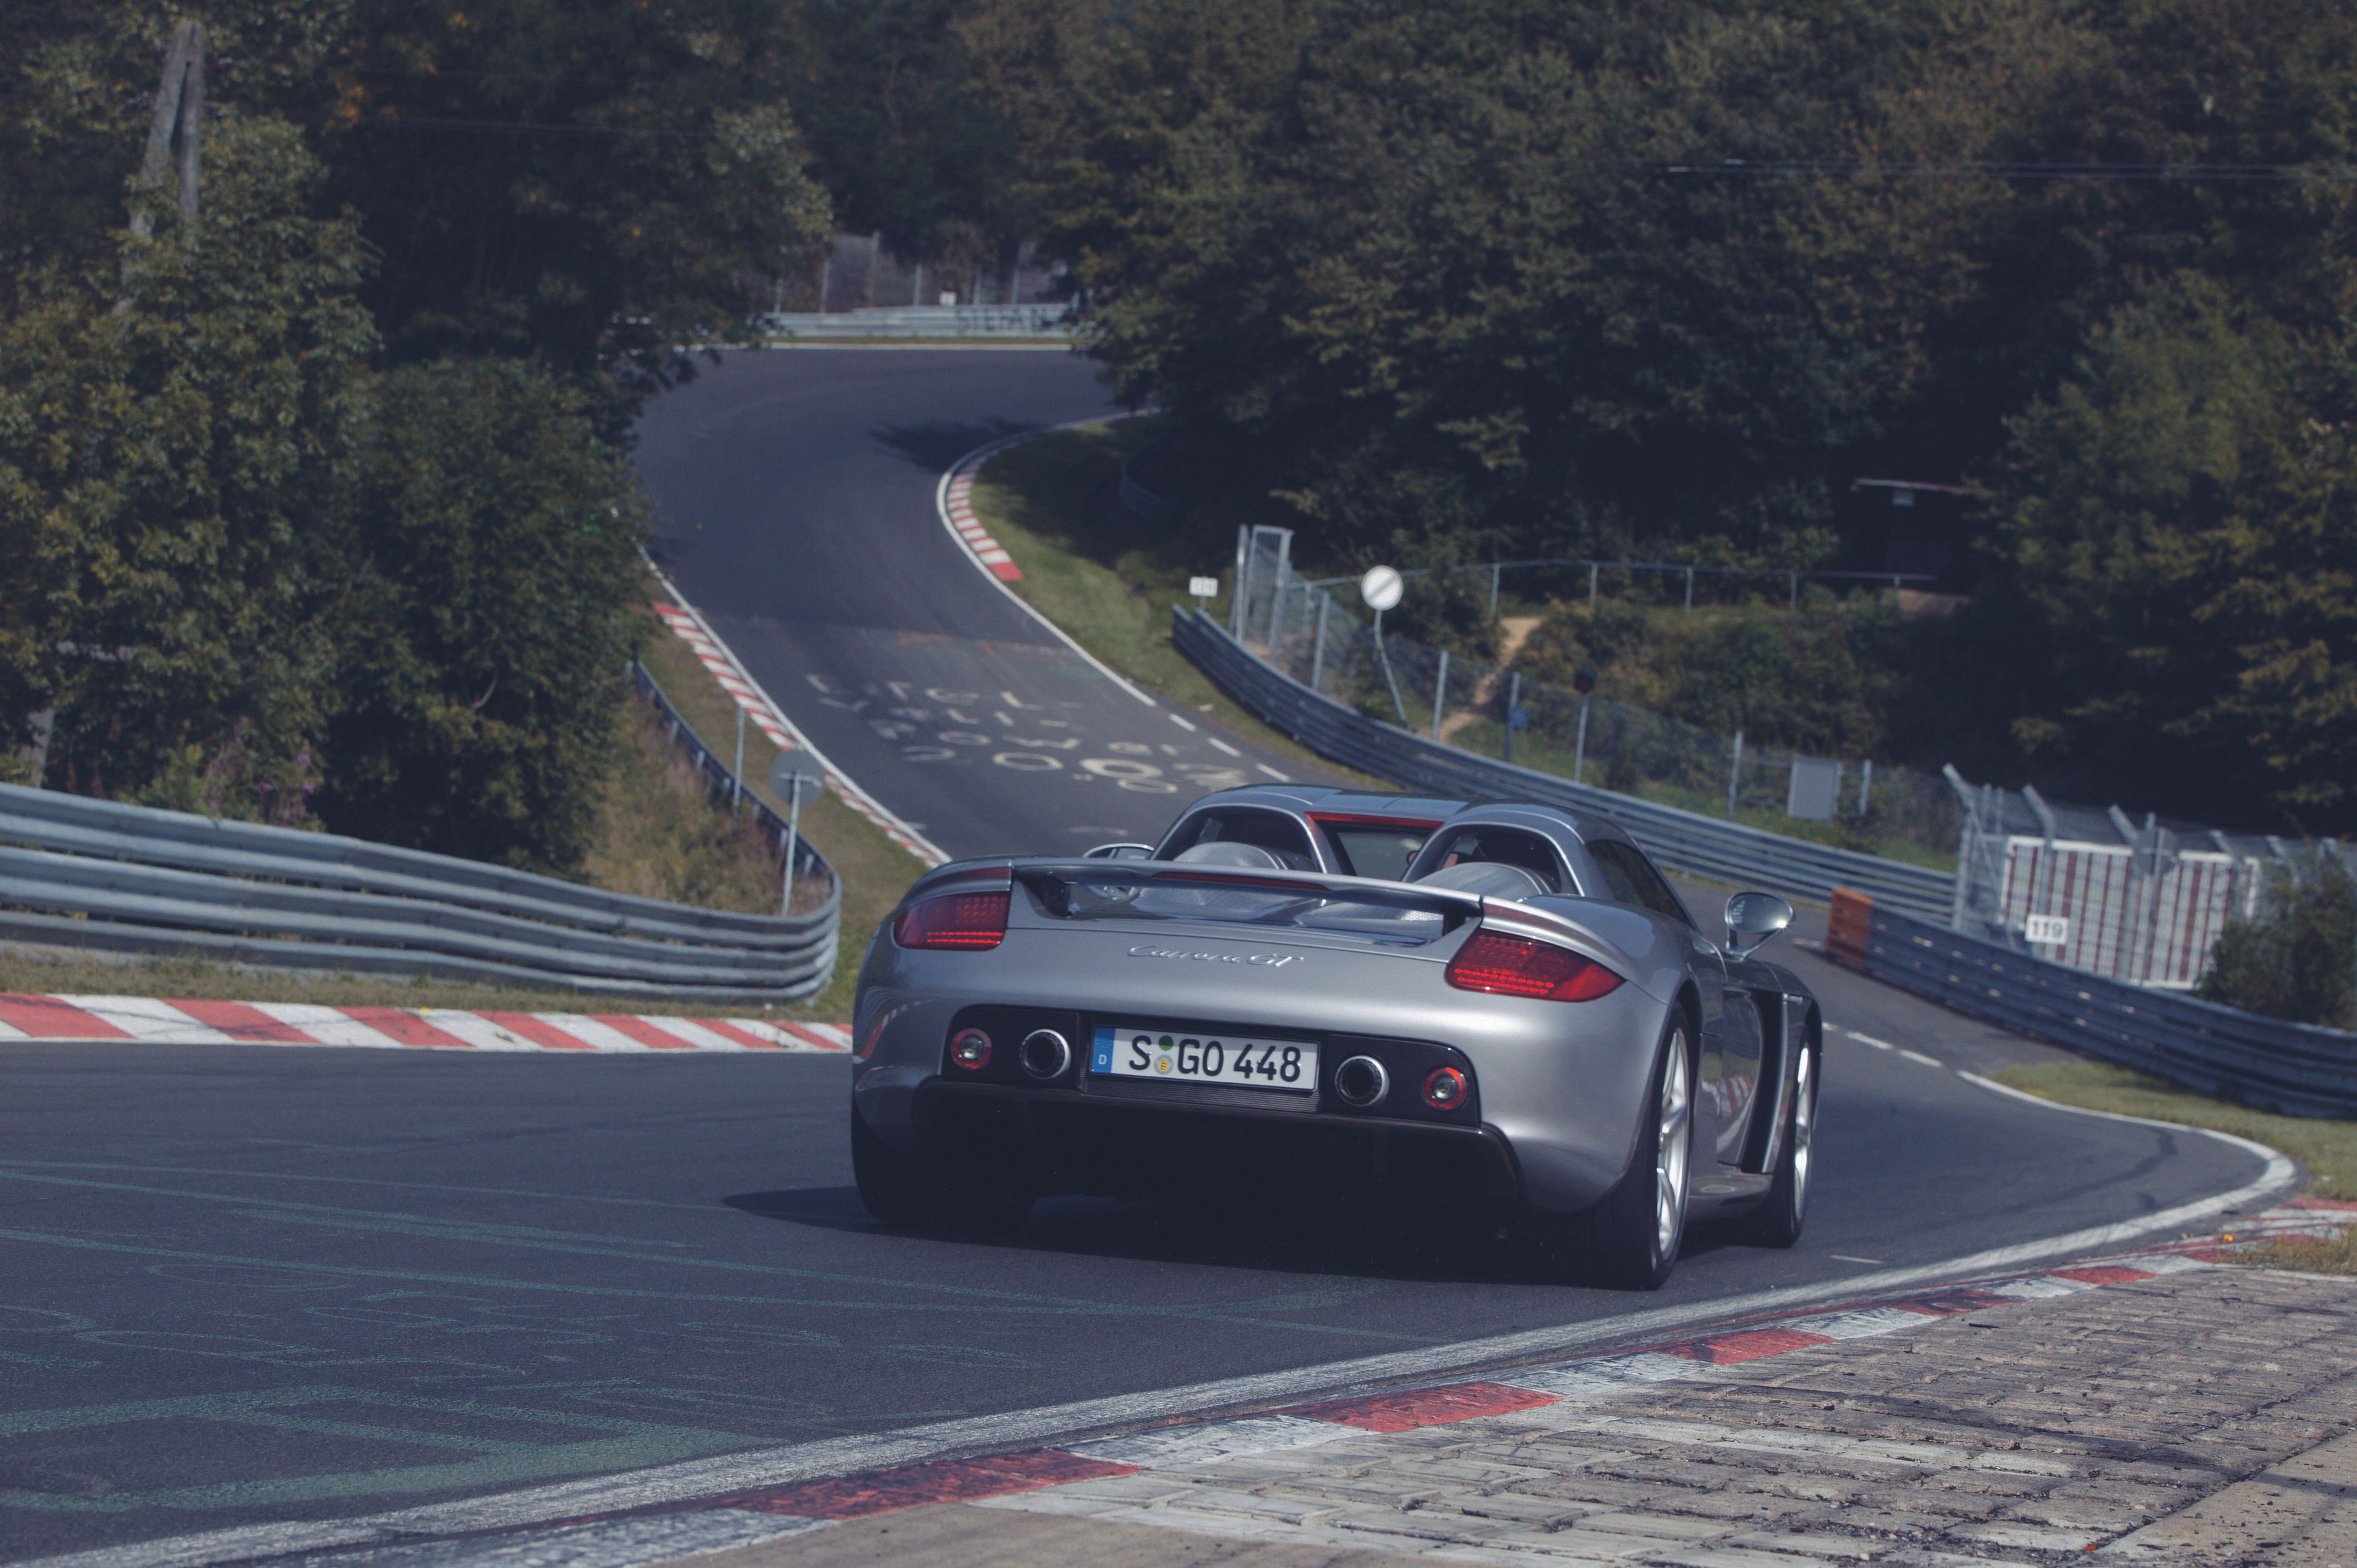 A Carrera GT on a track.